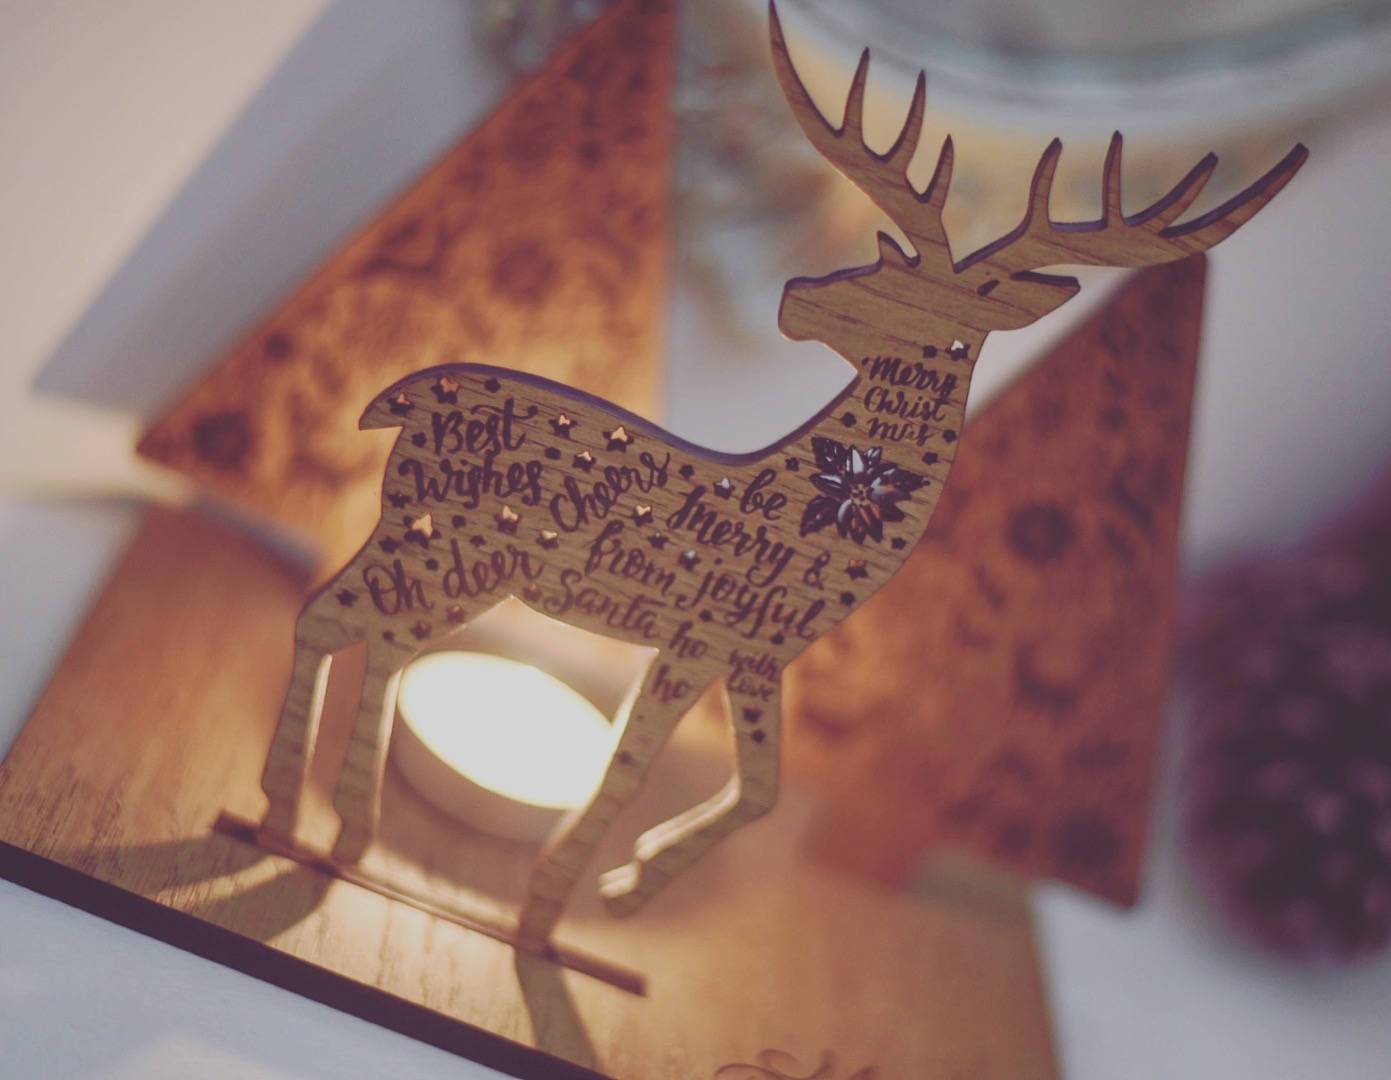 Reindeer & Christmas Tree Candle Holder